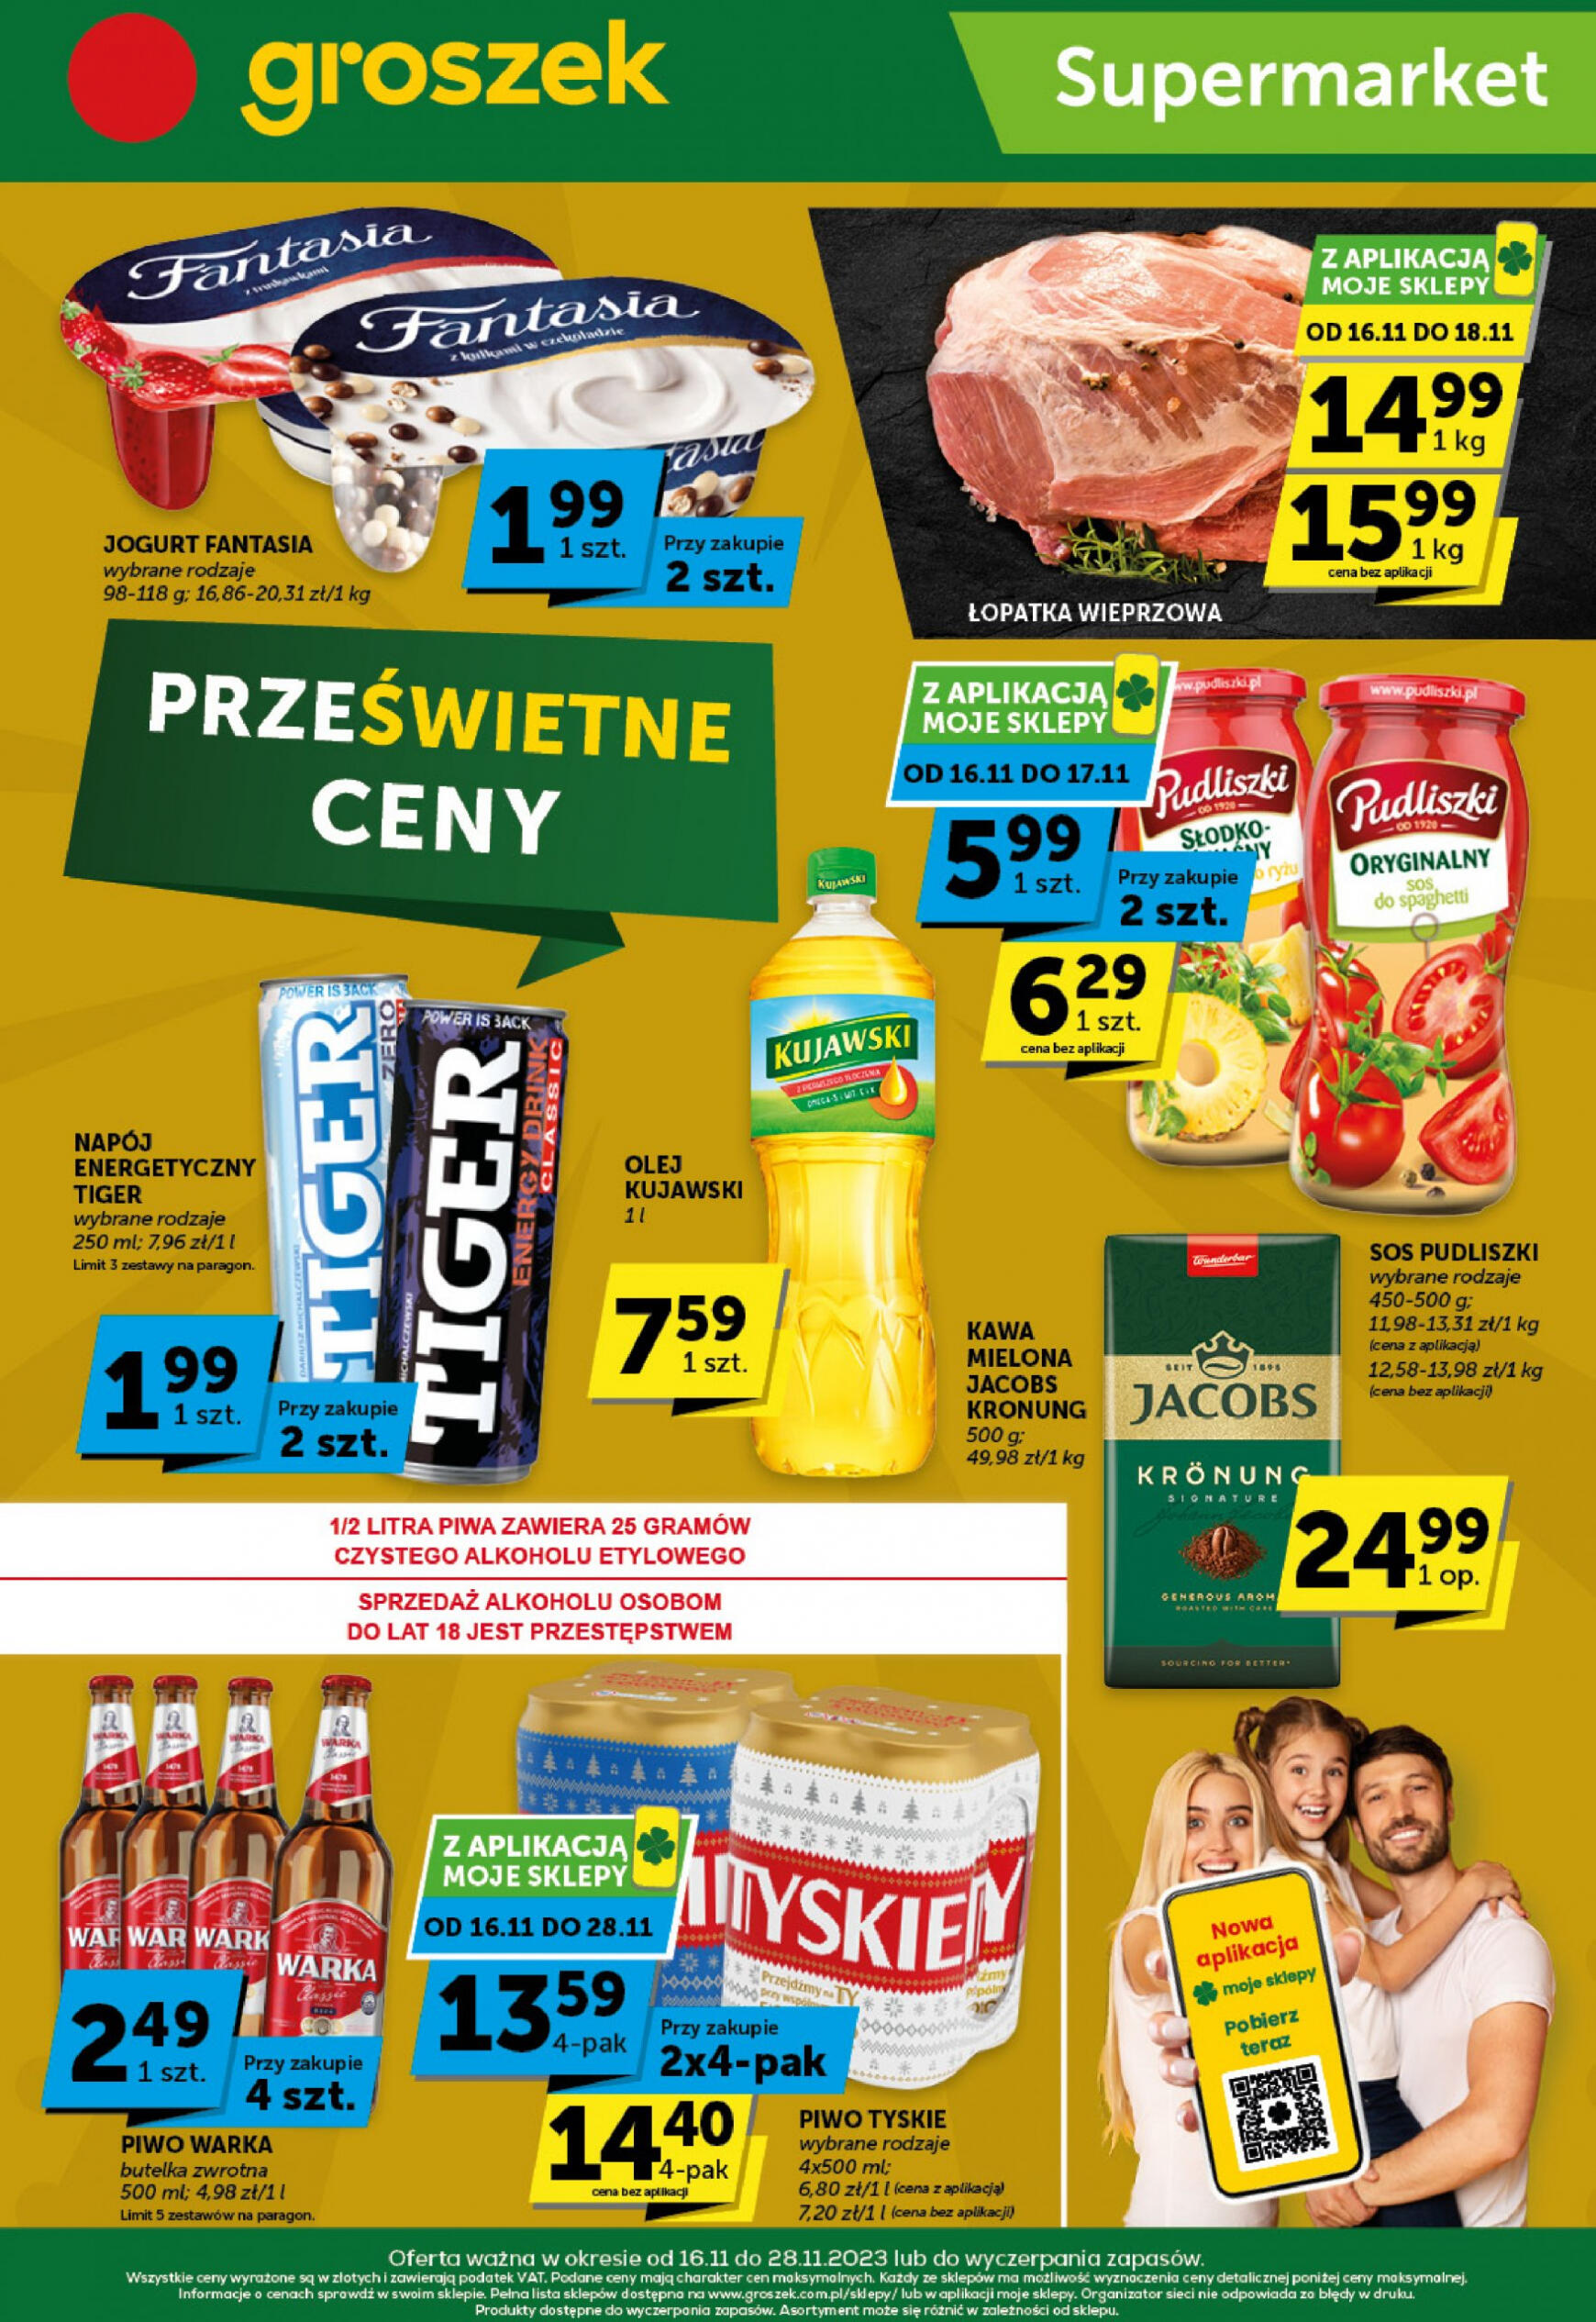 groszek - Groszek Supermarket - page: 1